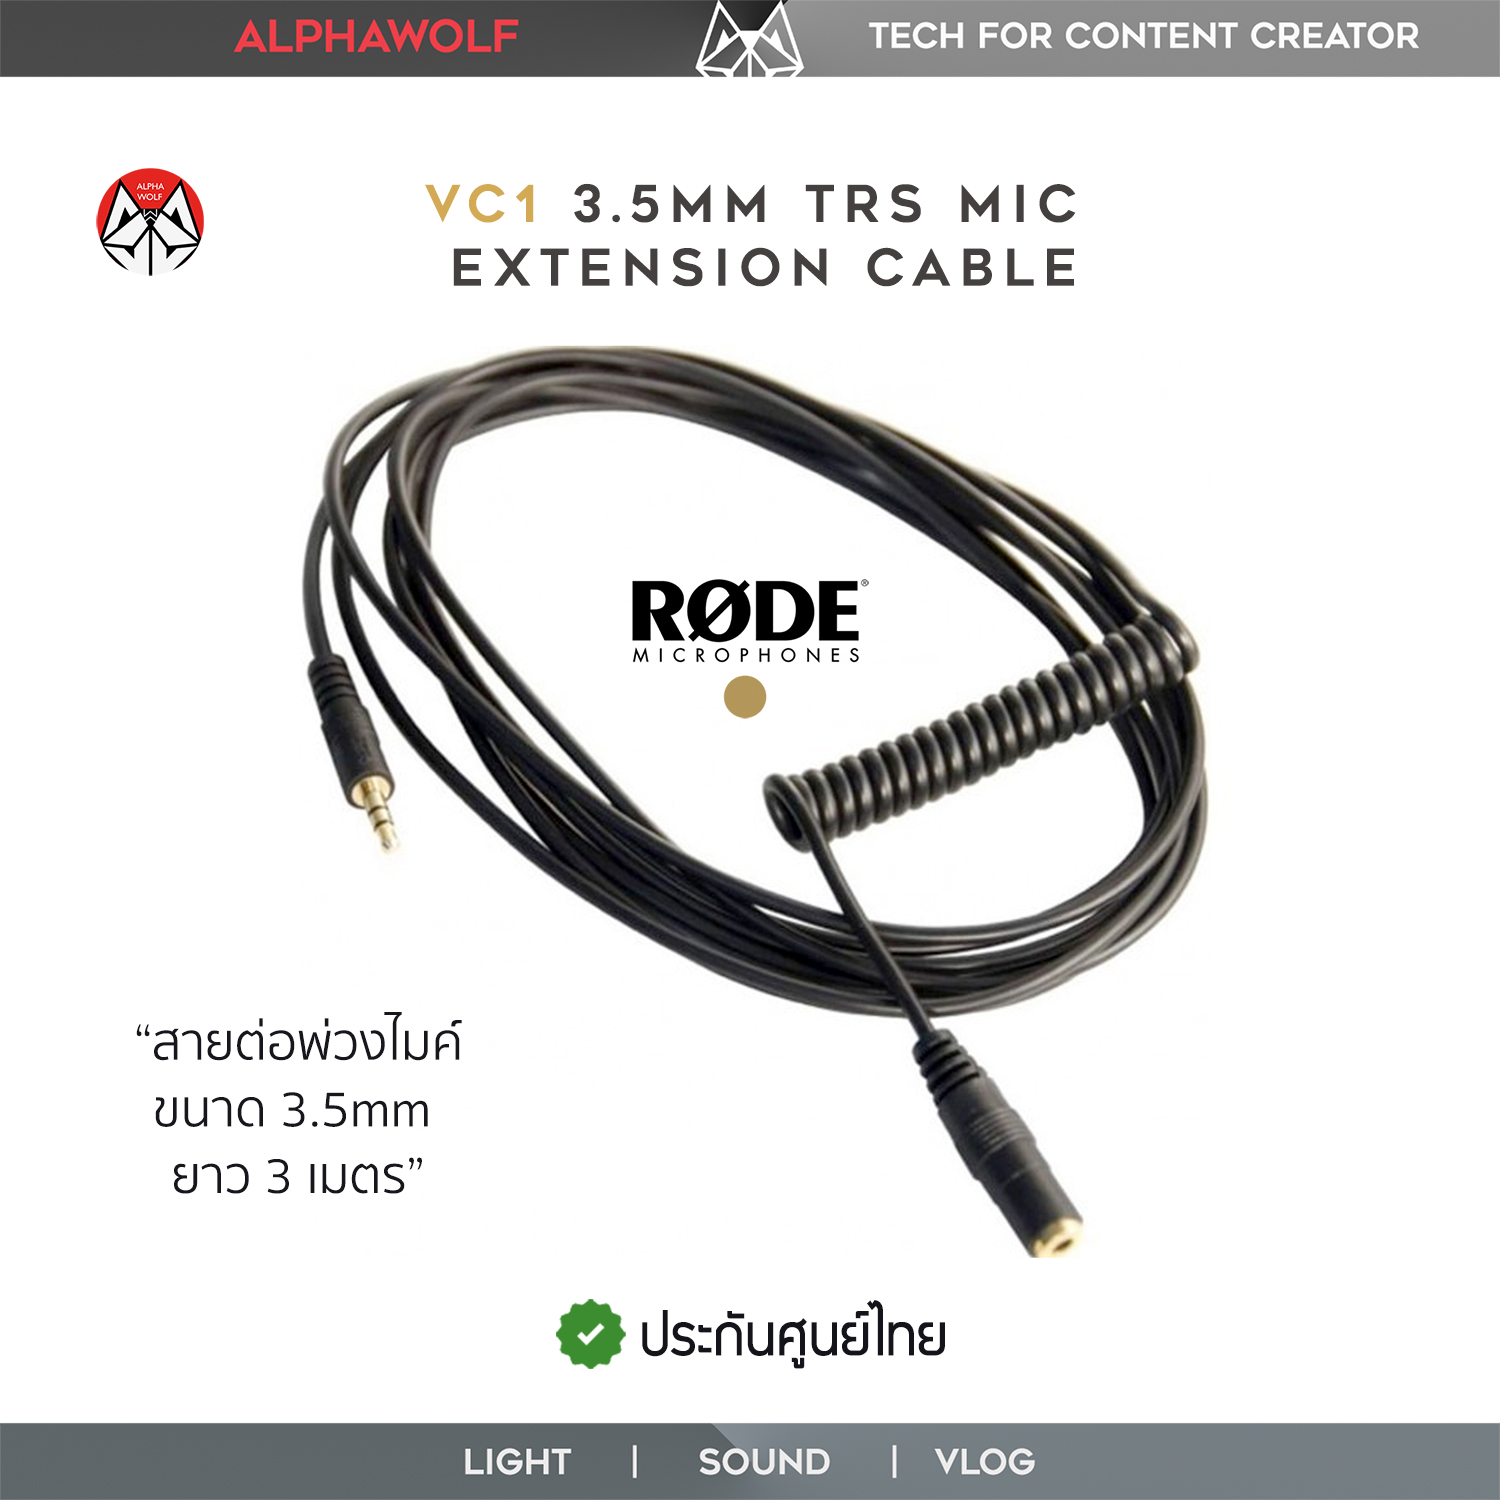 RODE VC1 3.5mm TRS Microphone Extension Cable for Cameras สายพ่วงต่อขนาด 3.5mm Male to Female ยาว 3เมตร สำหรับไมโครโฟน ประกันศูนย์ไทย  ALPHAWOLF